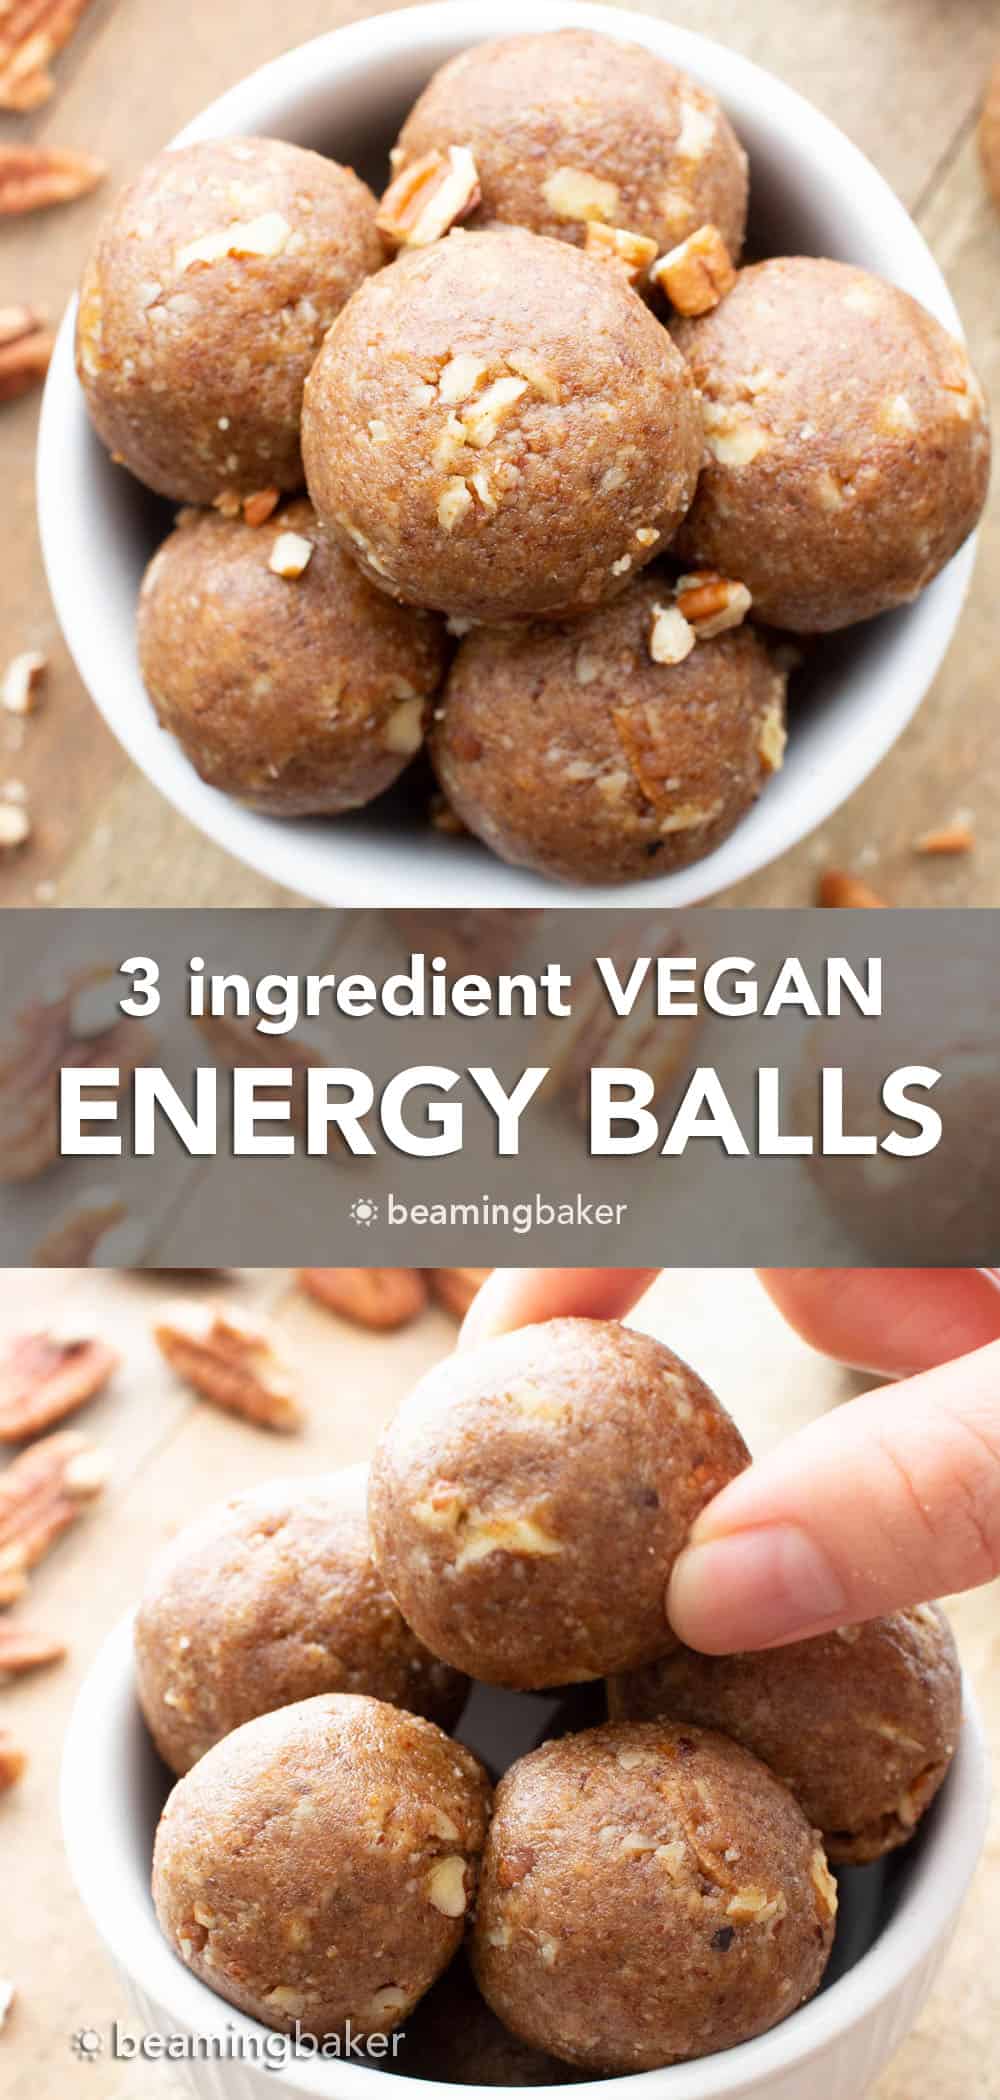 Vegan Energy Balls: just 3 ingredients for easy vegan energy balls that are soft, satisfying and delicious. Made with healthy, simple ingredients. #Vegan #EnergyBalls #NoBake #EnergyBites | Recipe at BeamingBaker.com